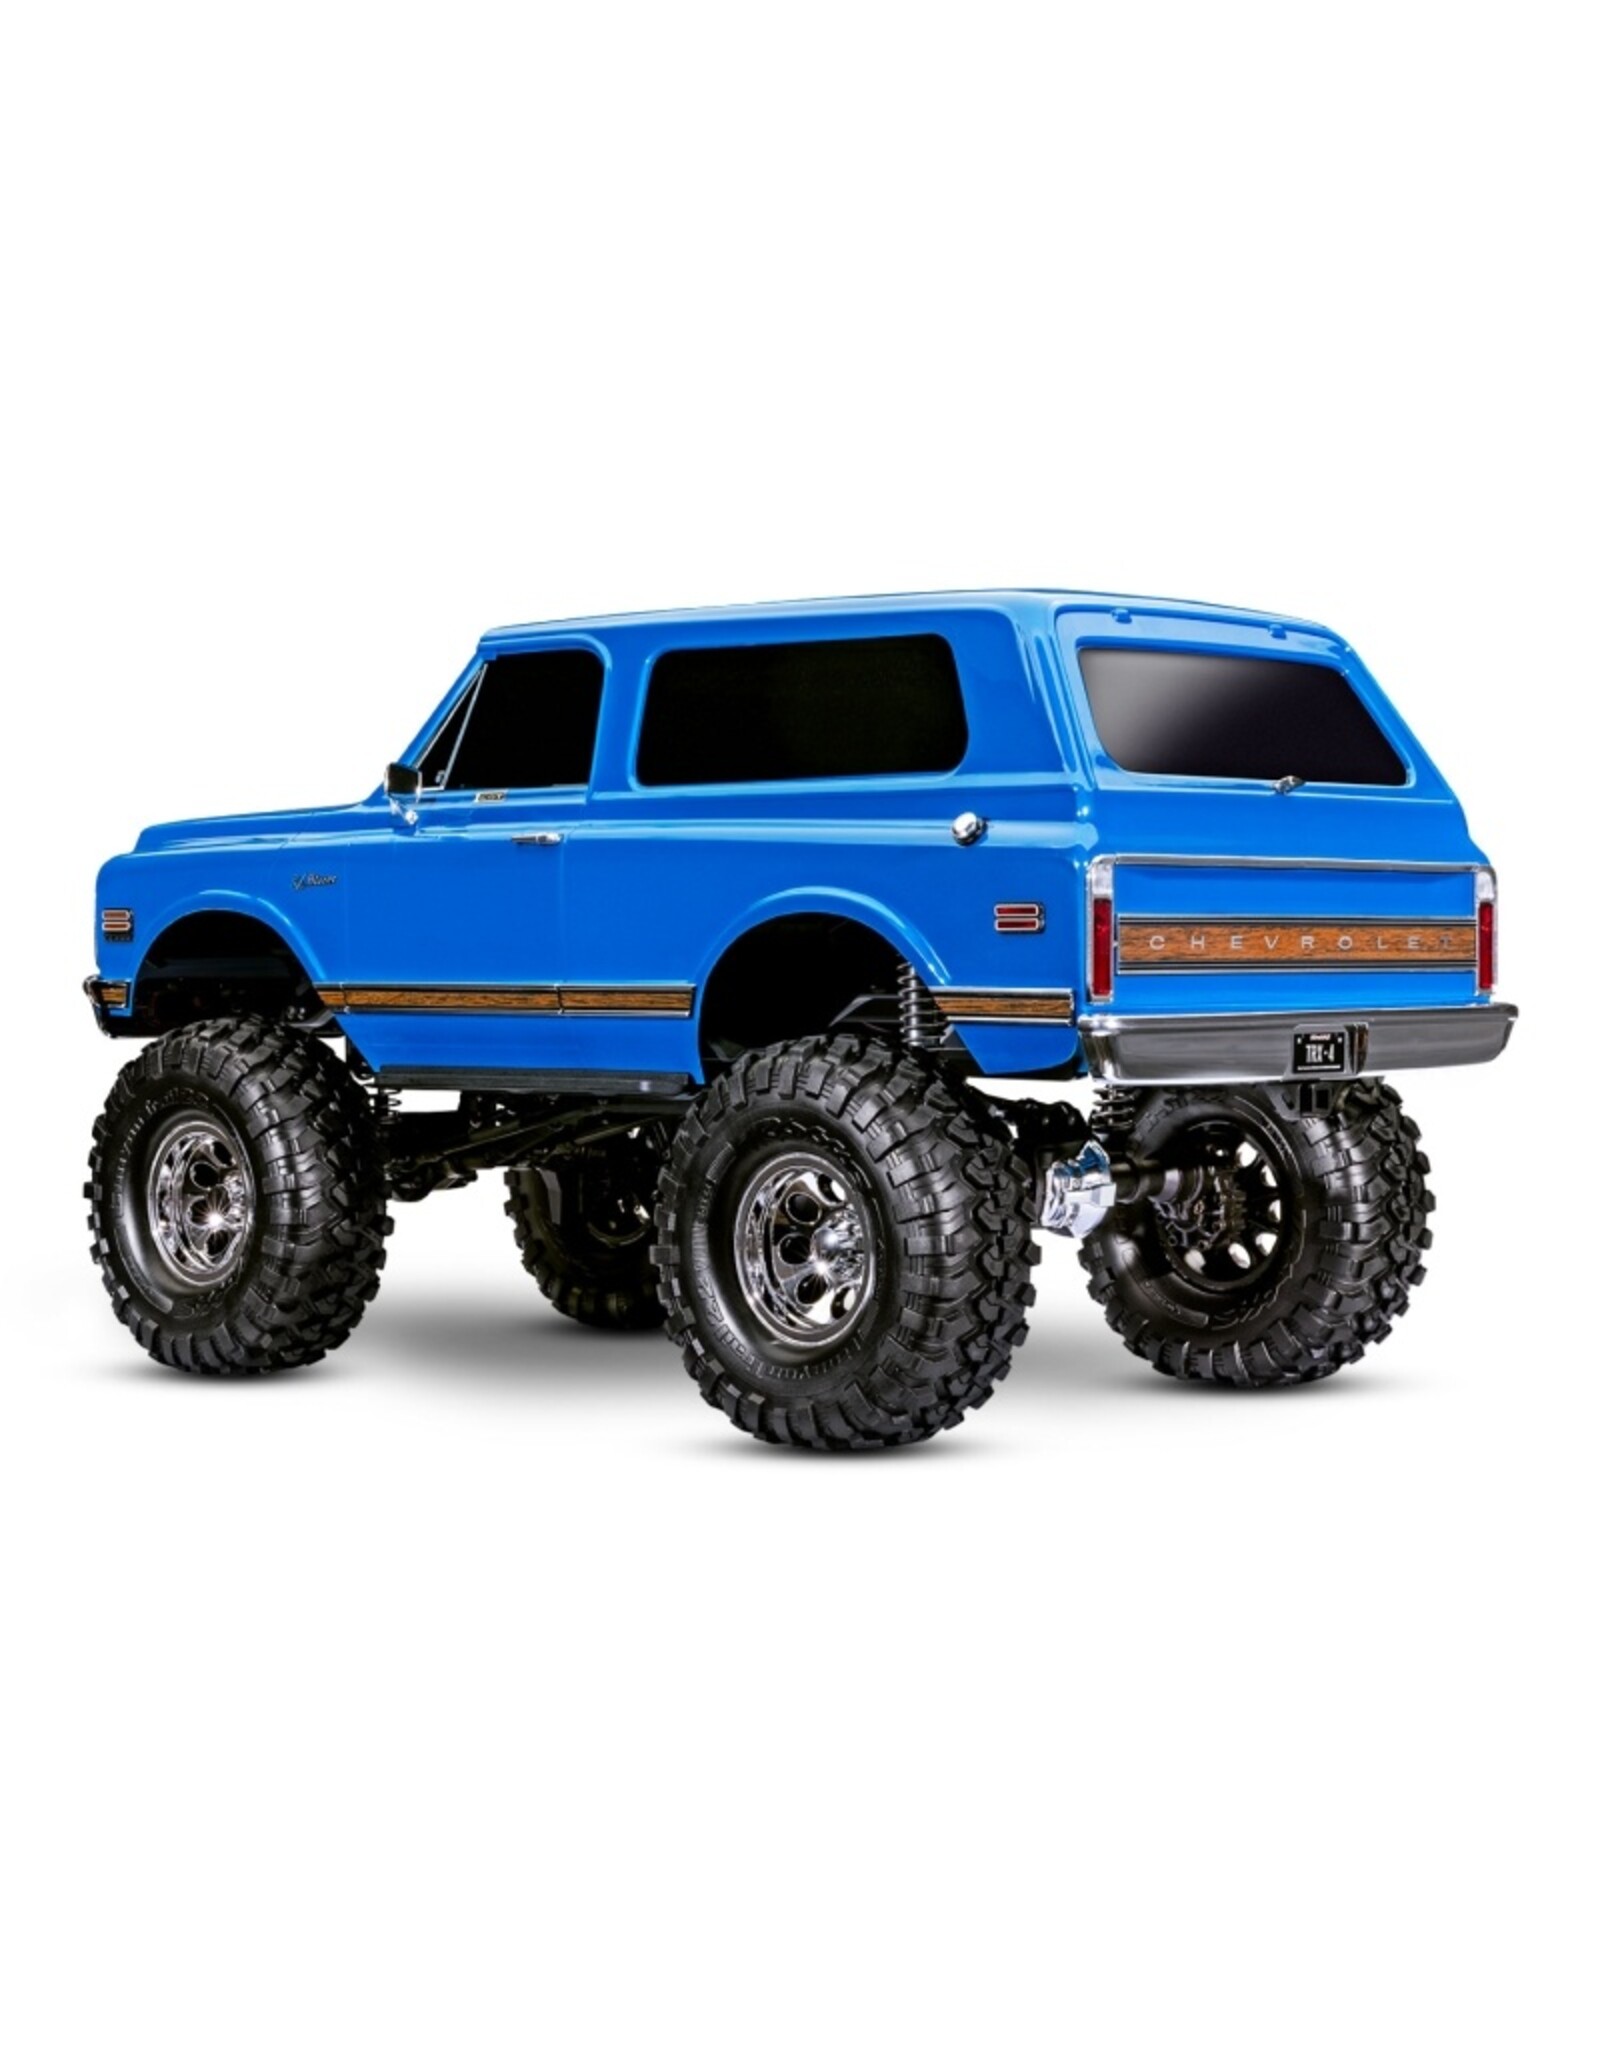 Traxxas TRA92086-4  TRX-4 Chevrolet K5 Blazer High Trail Edition BLUE